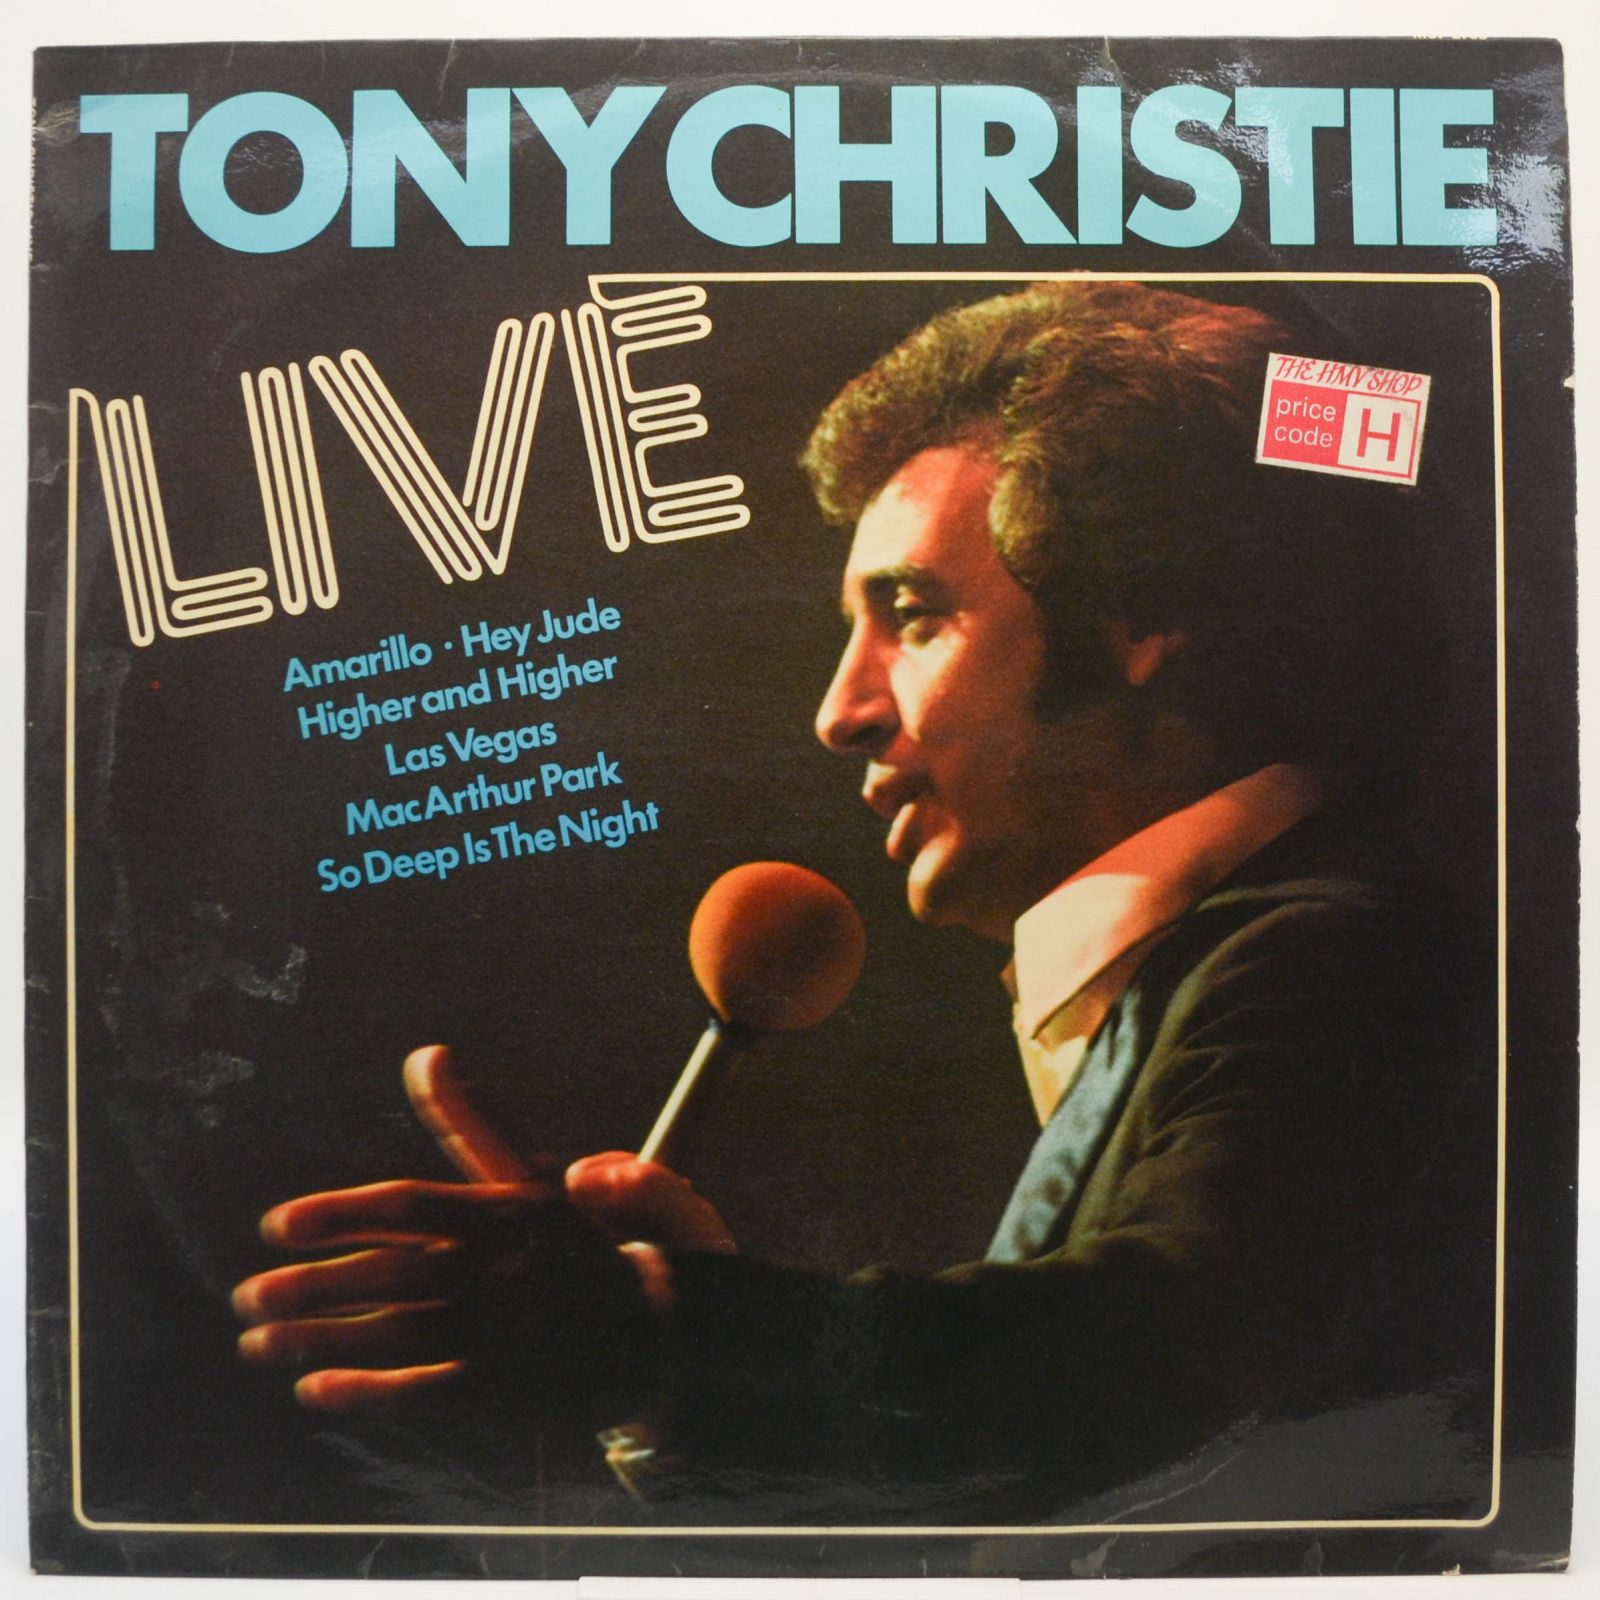 Tony Christie — Live (UK), 1975